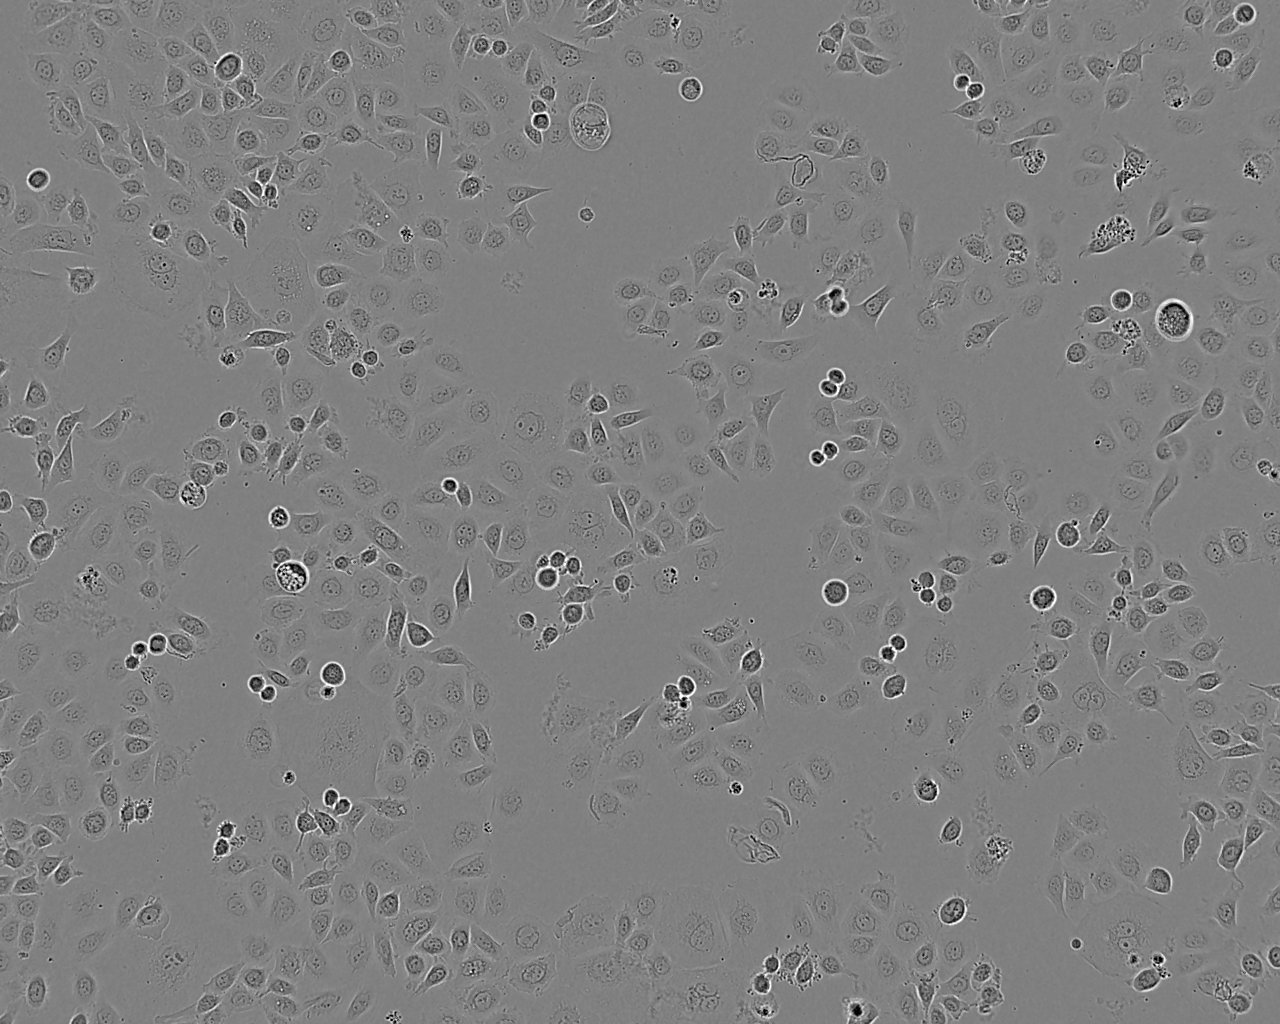 NCI-H358 epithelioid cells人非小细胞肺癌细胞系,NCI-H358 epithelioid cells